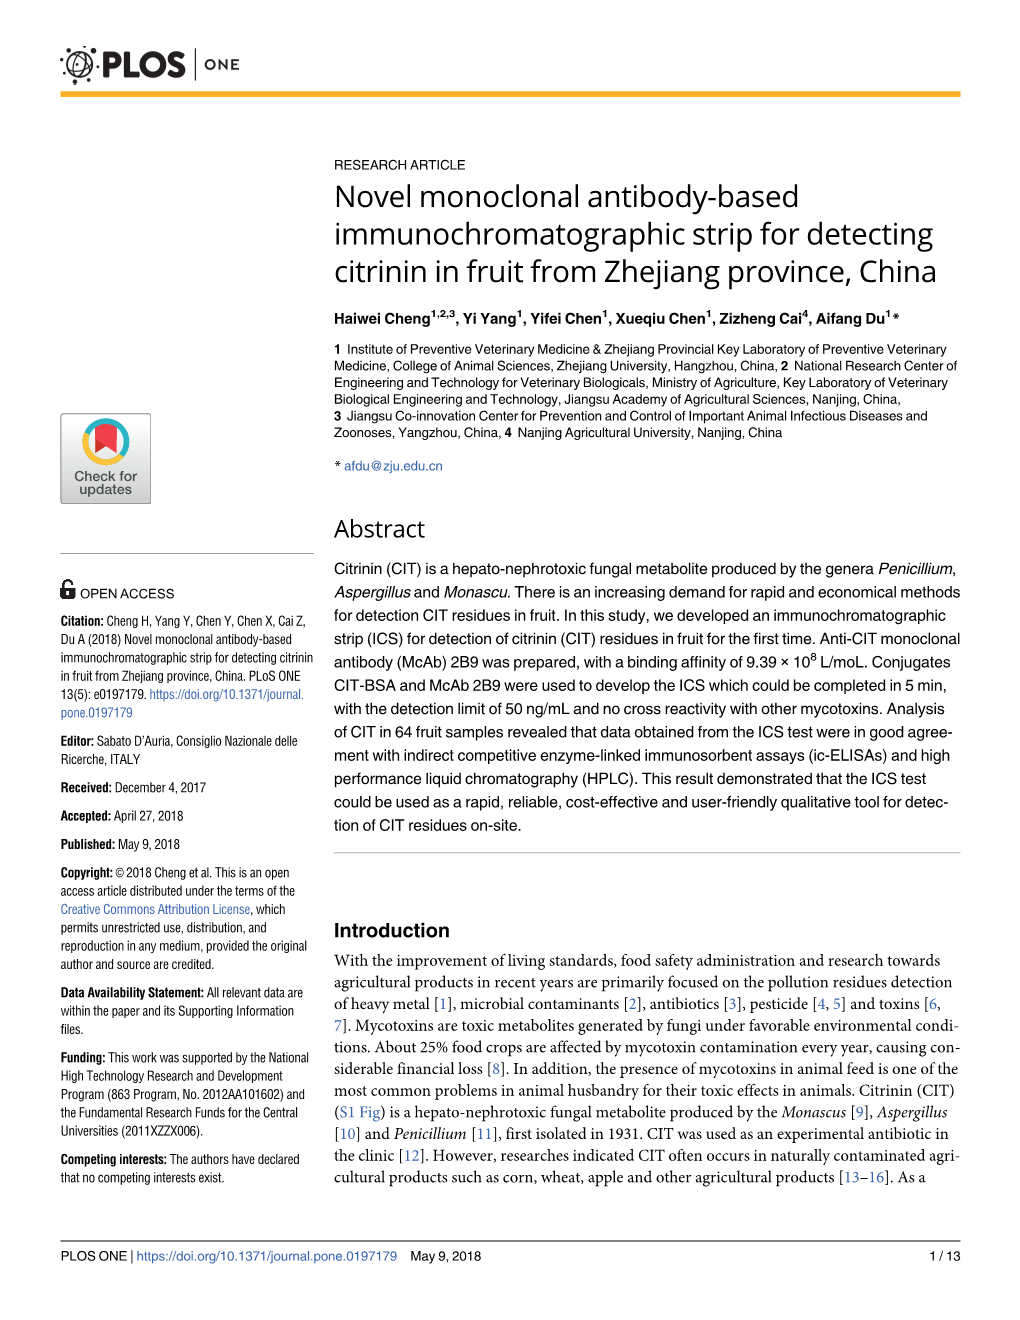 Novel Monoclonal Antibody-Based Immunochromatographic Strip for Detecting Citrinin in Fruit from Zhejiang Province, China